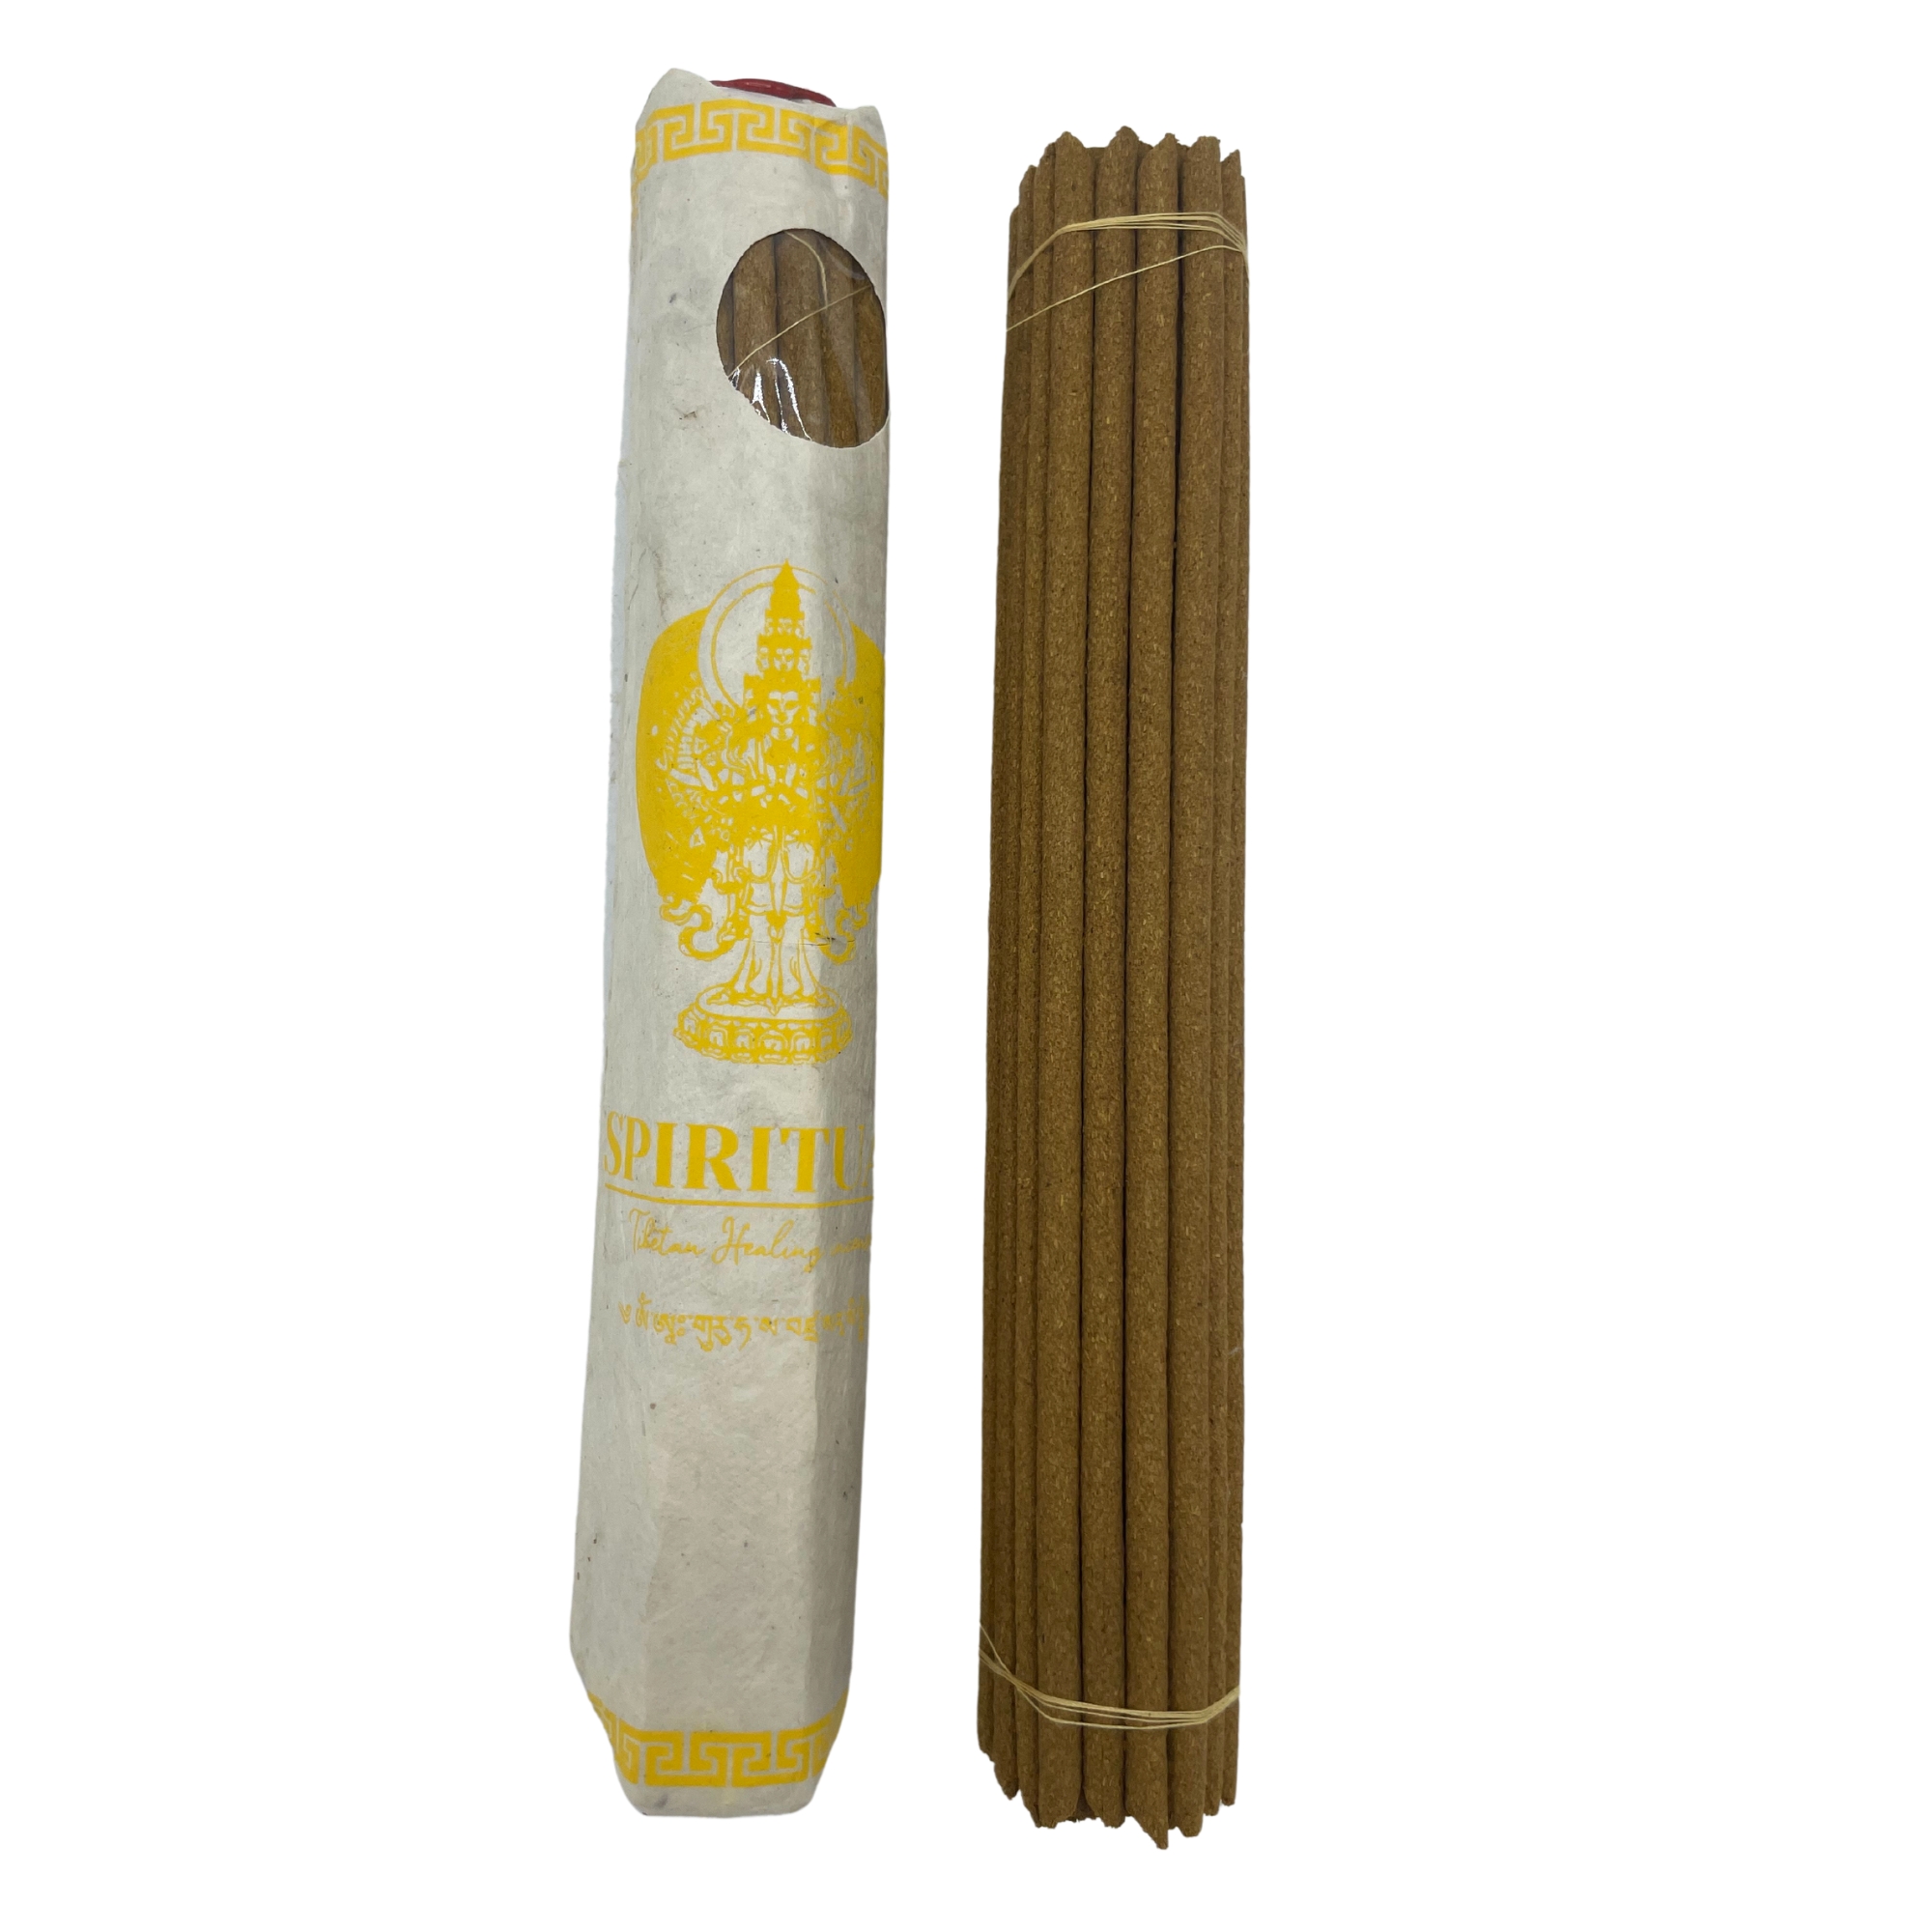 Rolled Pack of 30 Premium Tibetan Incense - Spiritual